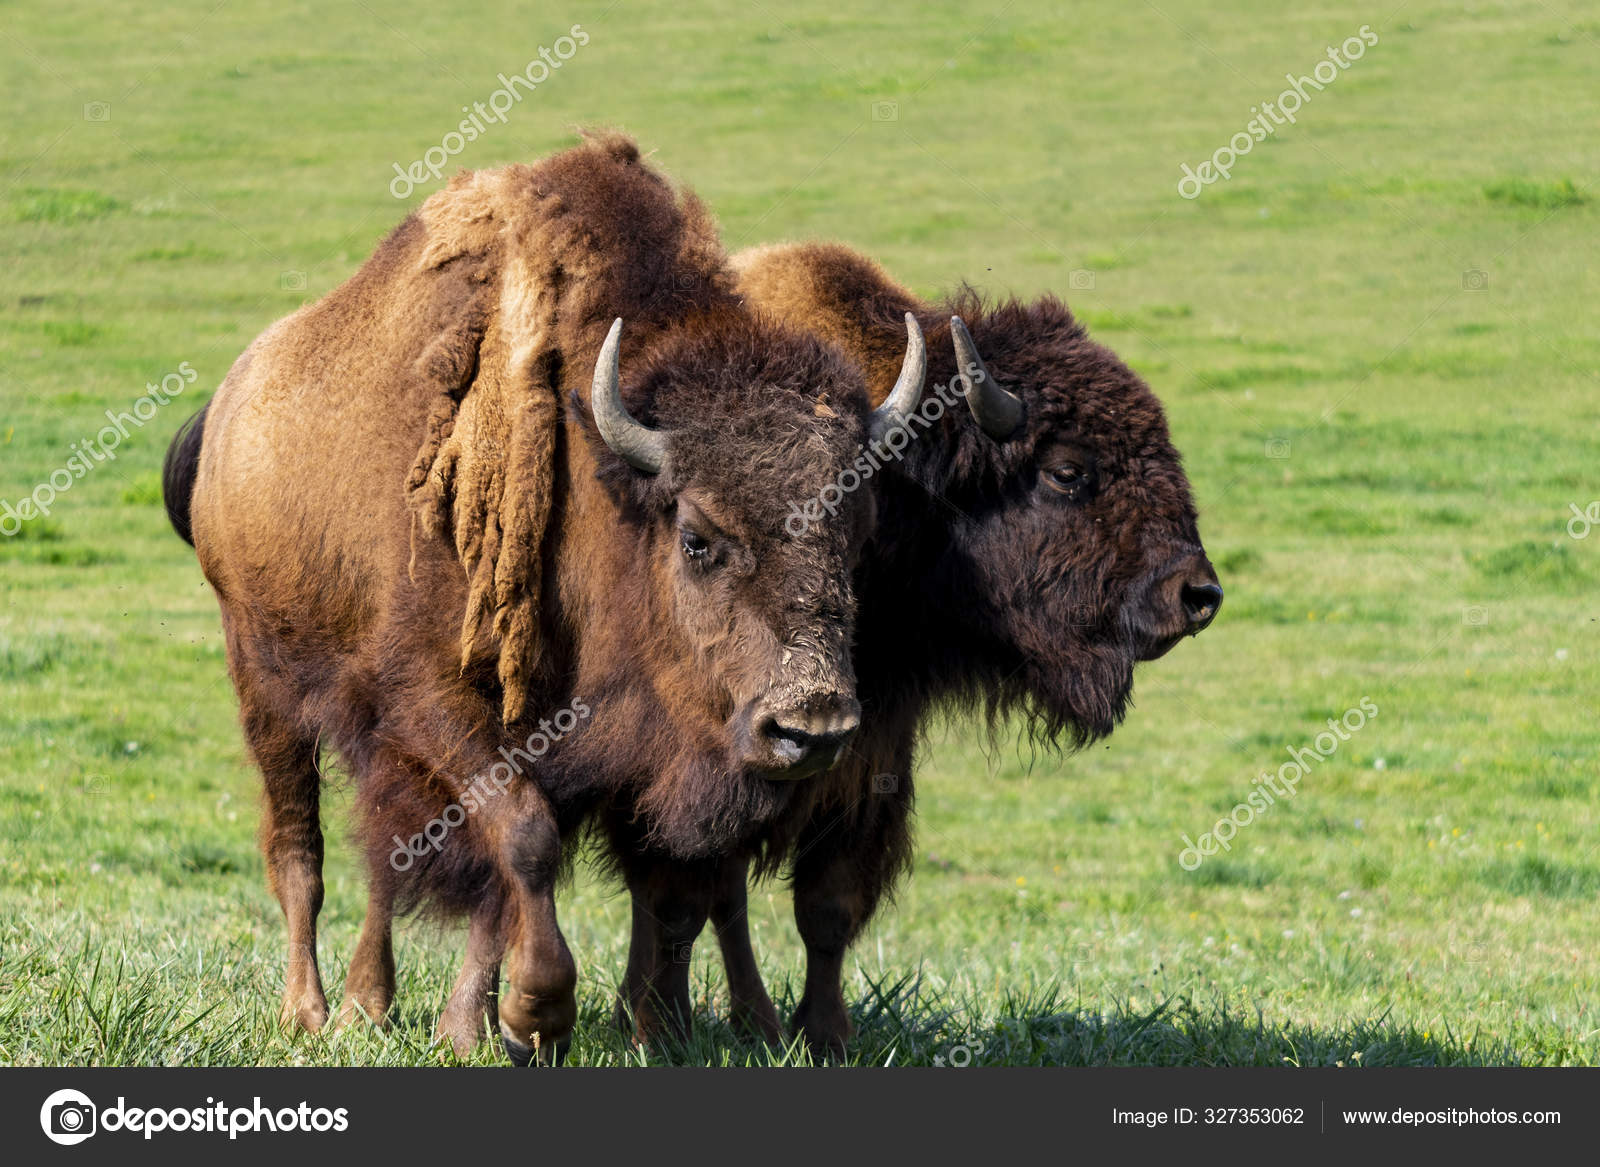 bison Stock Photos, Royalty Free Bos bison | Depositphotos